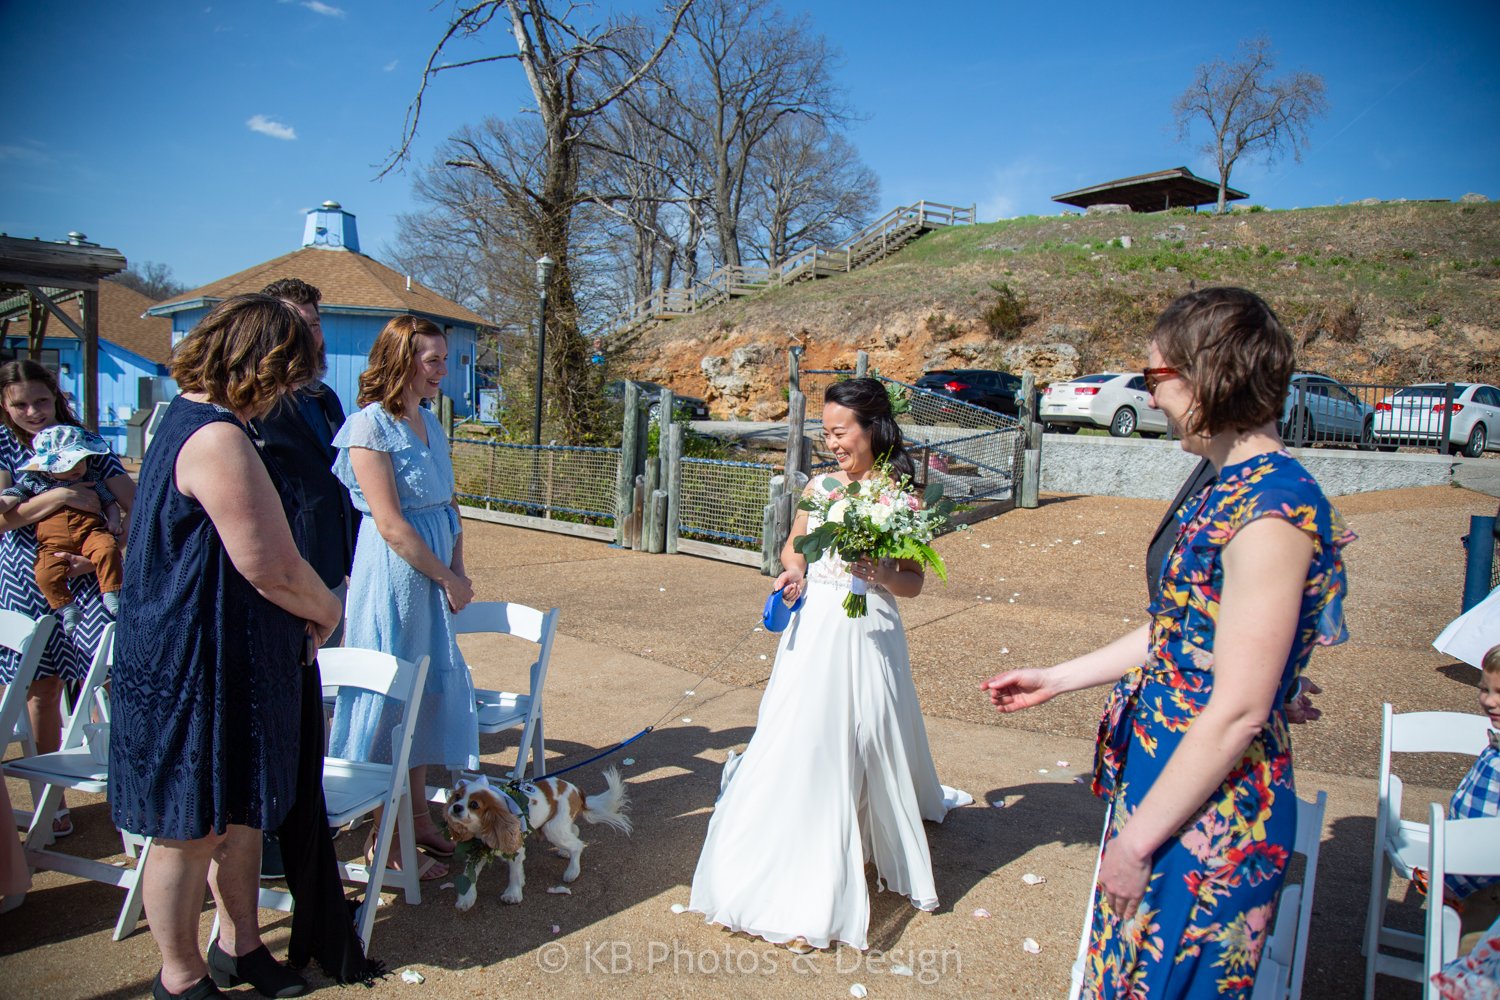 Wedding-Destination-Photography-Lake-of-the-Ozarks-Missouri-Wade-Natsuko-Jefferson-City-bride-groom-Lodge-of-Four-Seasons-wedding-photographer-KB-Photos-and-Design-119.jpg